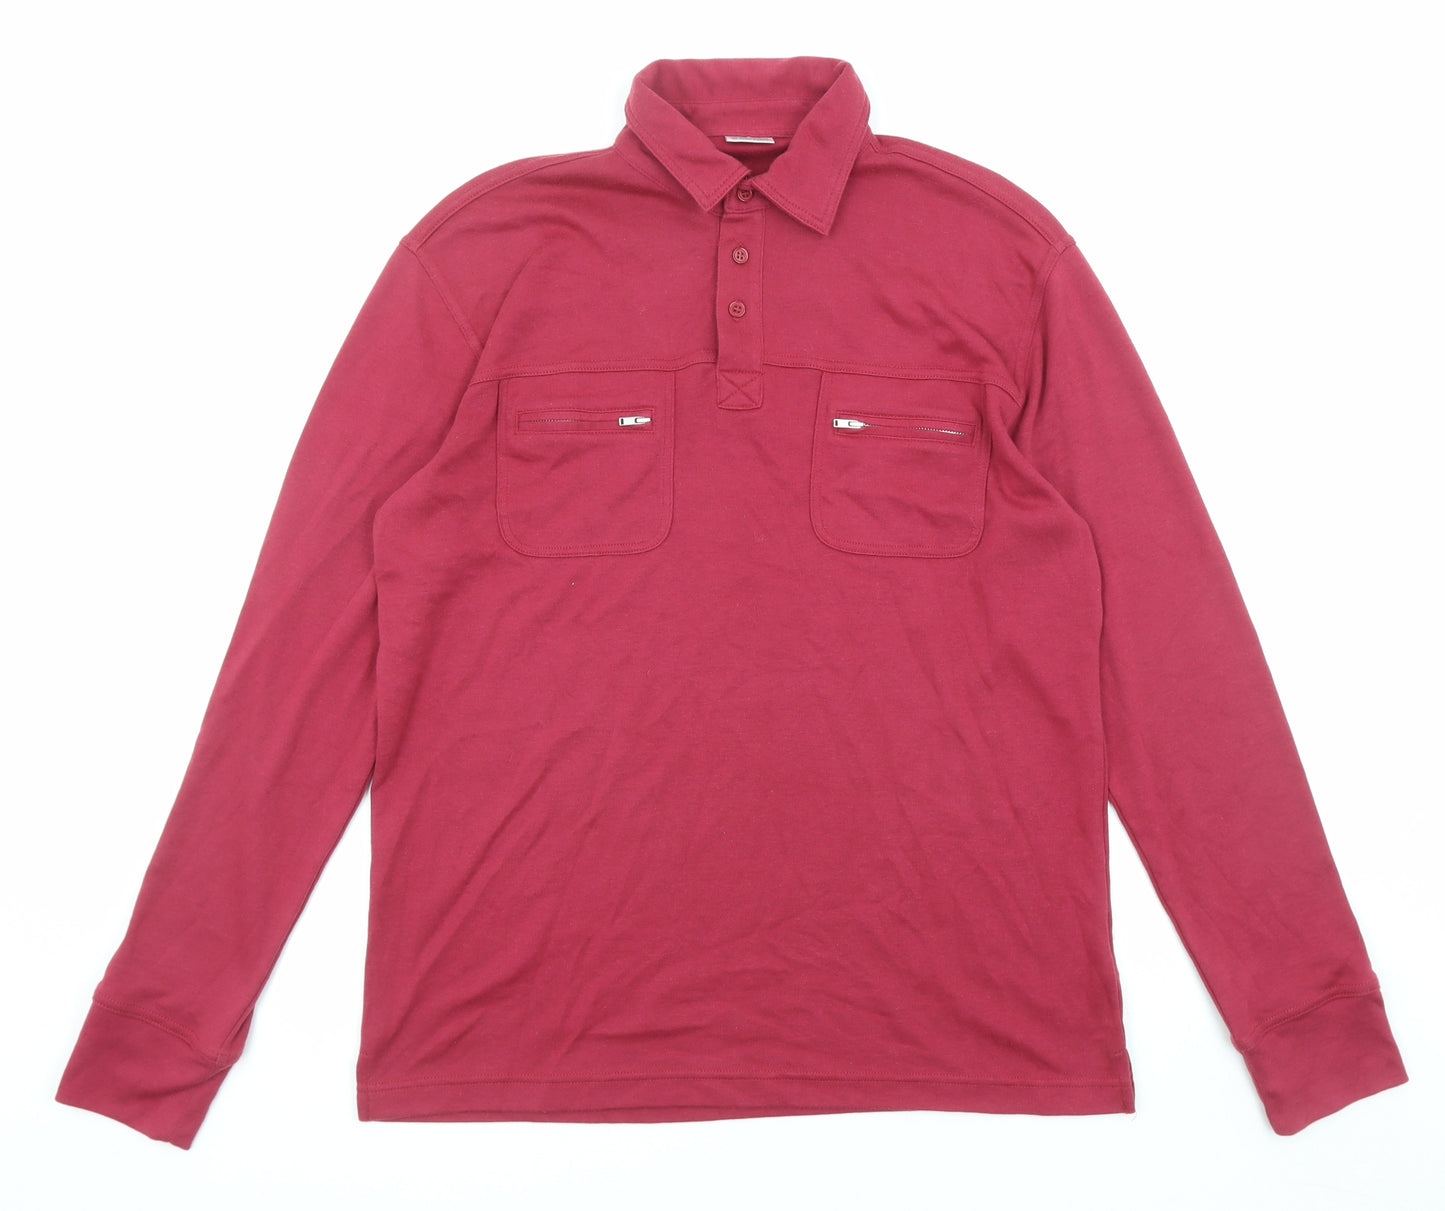 Damart Mens Purple Polyester Pullover Sweatshirt Size L